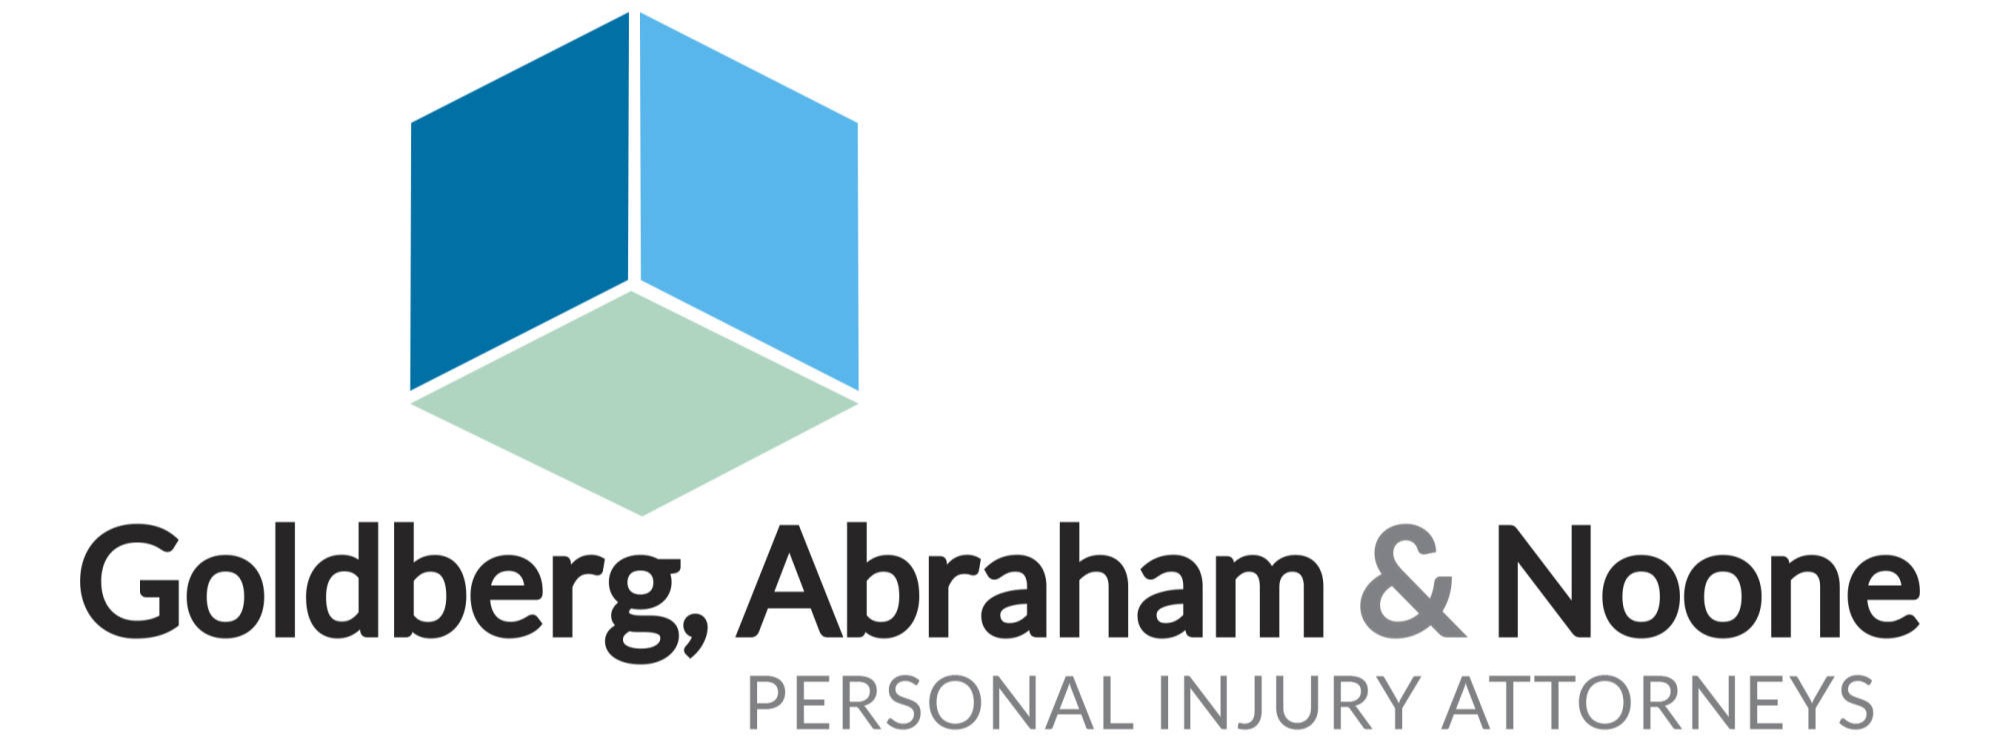 Goldberg Abraham and Noone Logo Reject